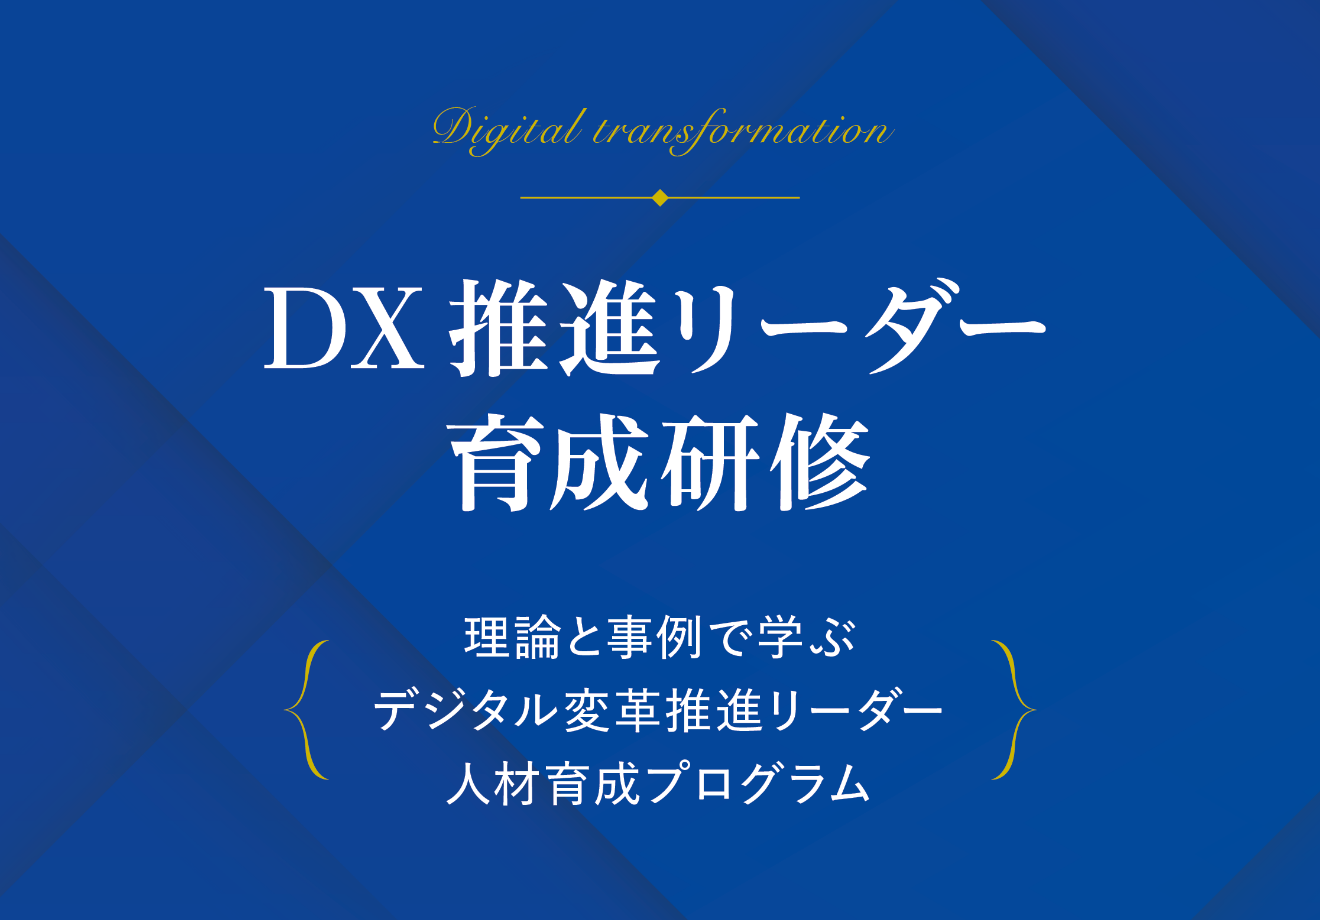 DX推進リーダー育成研修